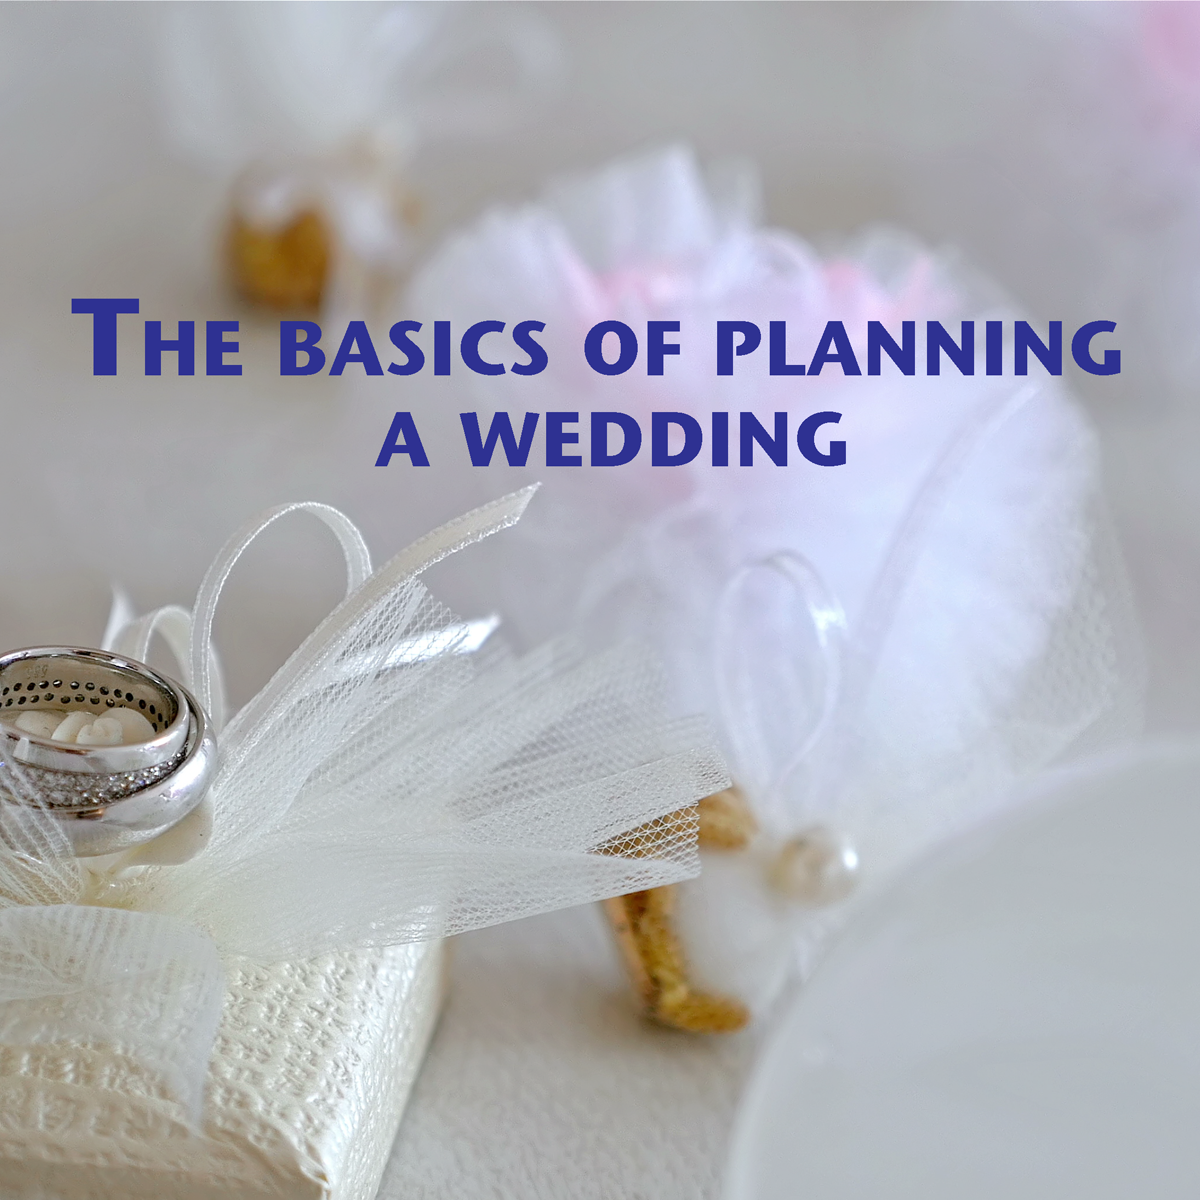 The basics of planning a wedding